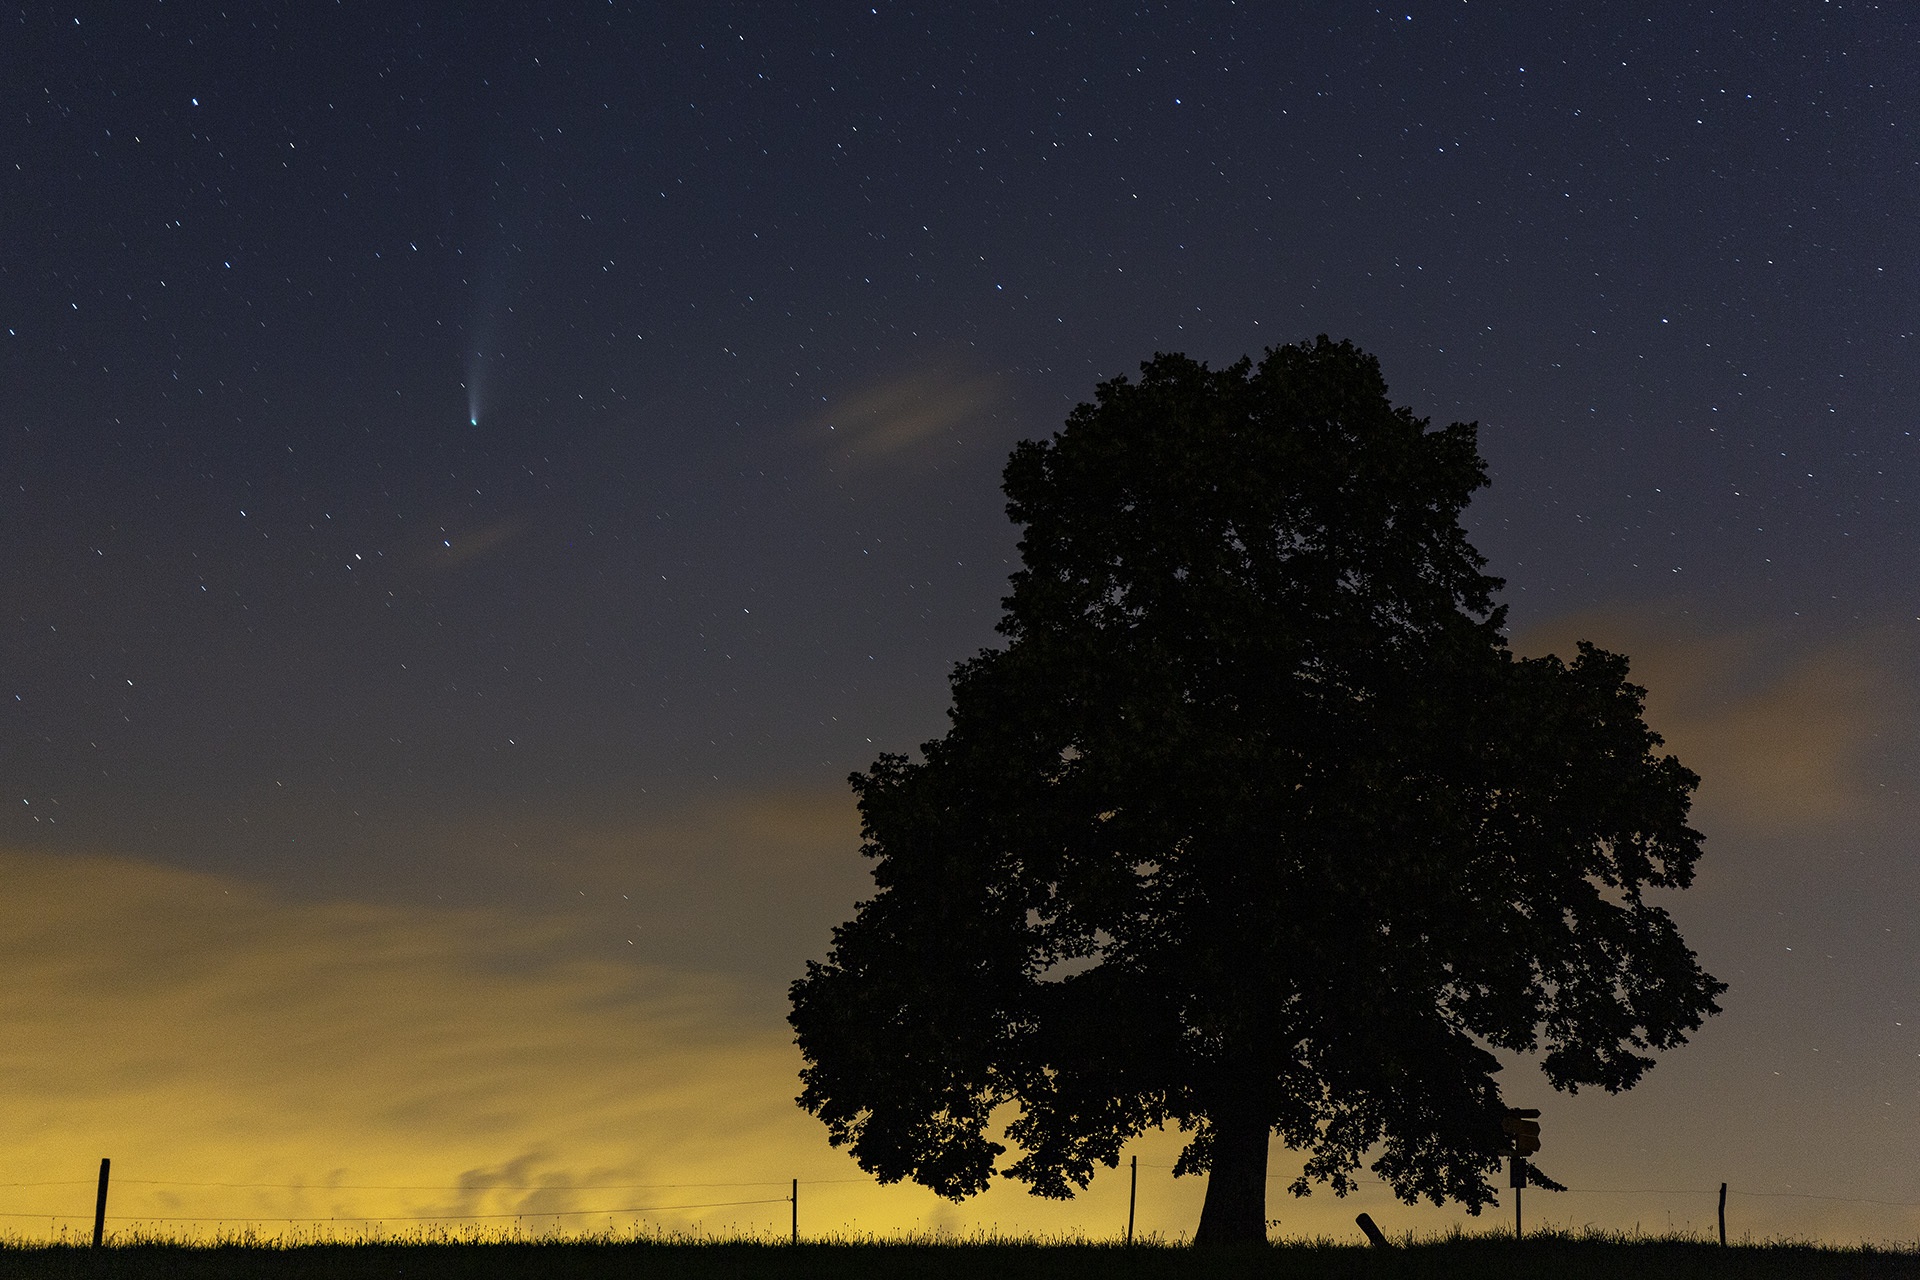 Comet C/2020 F3, Neowise, next to Linden tree silhouette, Challhöchi, Basel-Landschaft, Switzerland